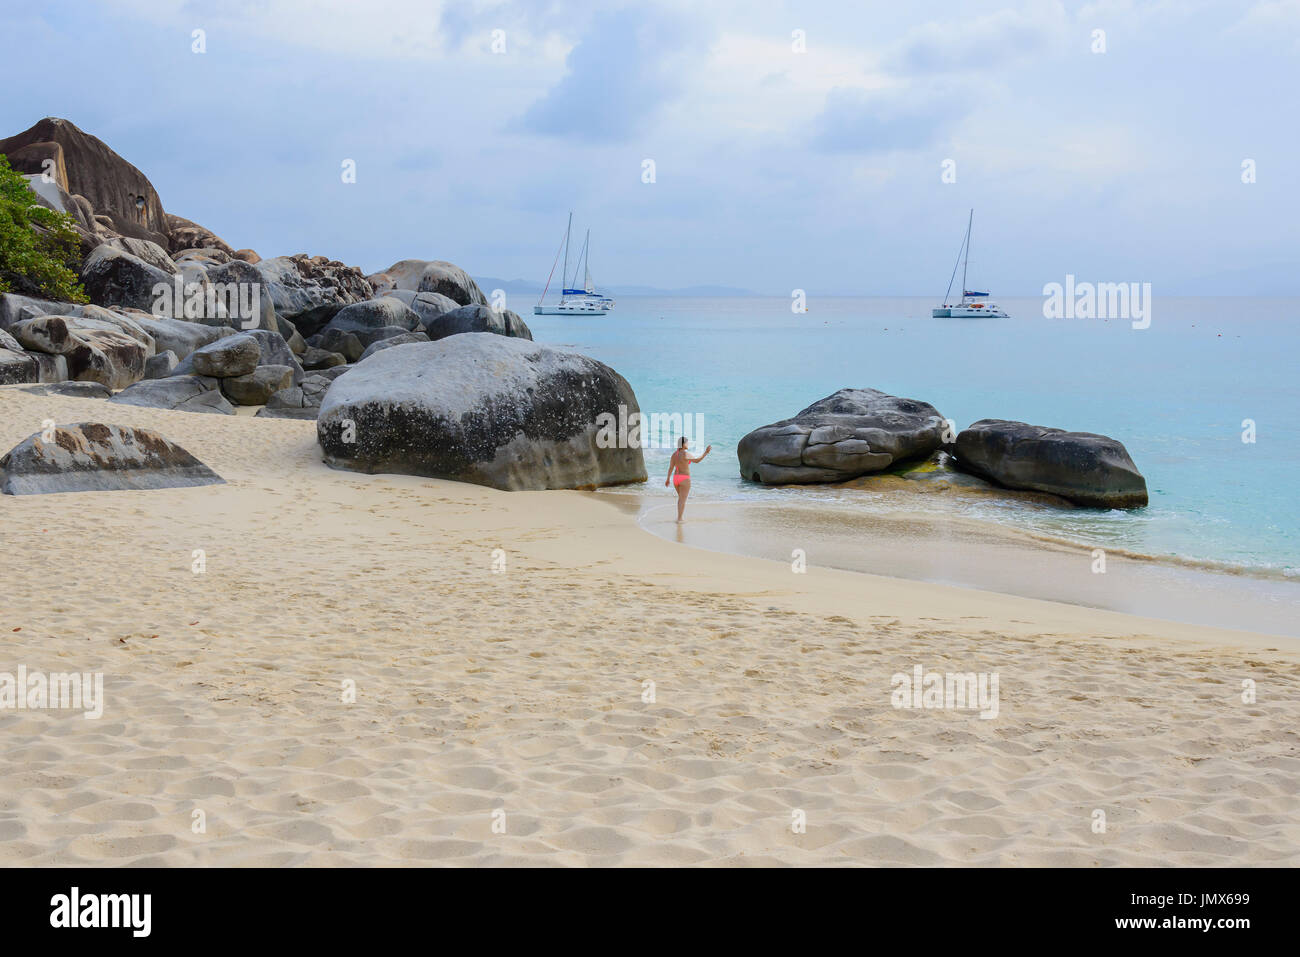 Spring bay with boulder and walking people, Virgin Gorda Island, British Virgin Islands, Caribbean Sea Stock Photo